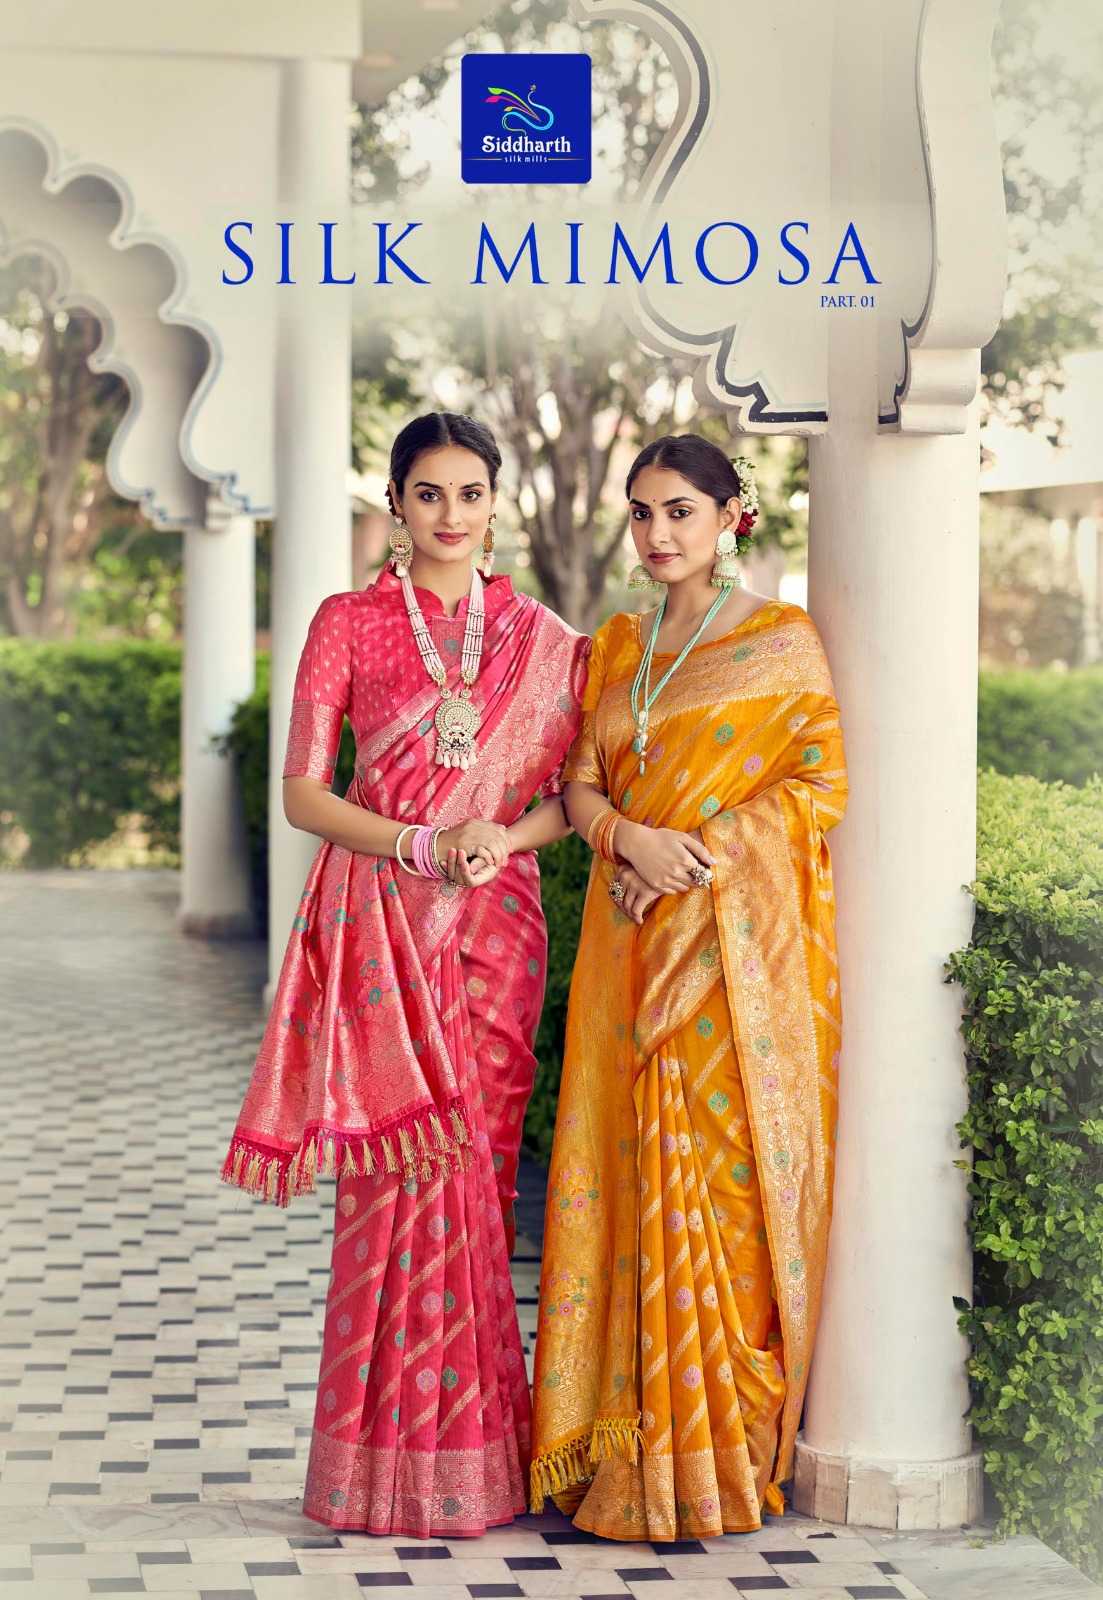 Silk mimosa by siddharth latest fashionable silk saree supplier